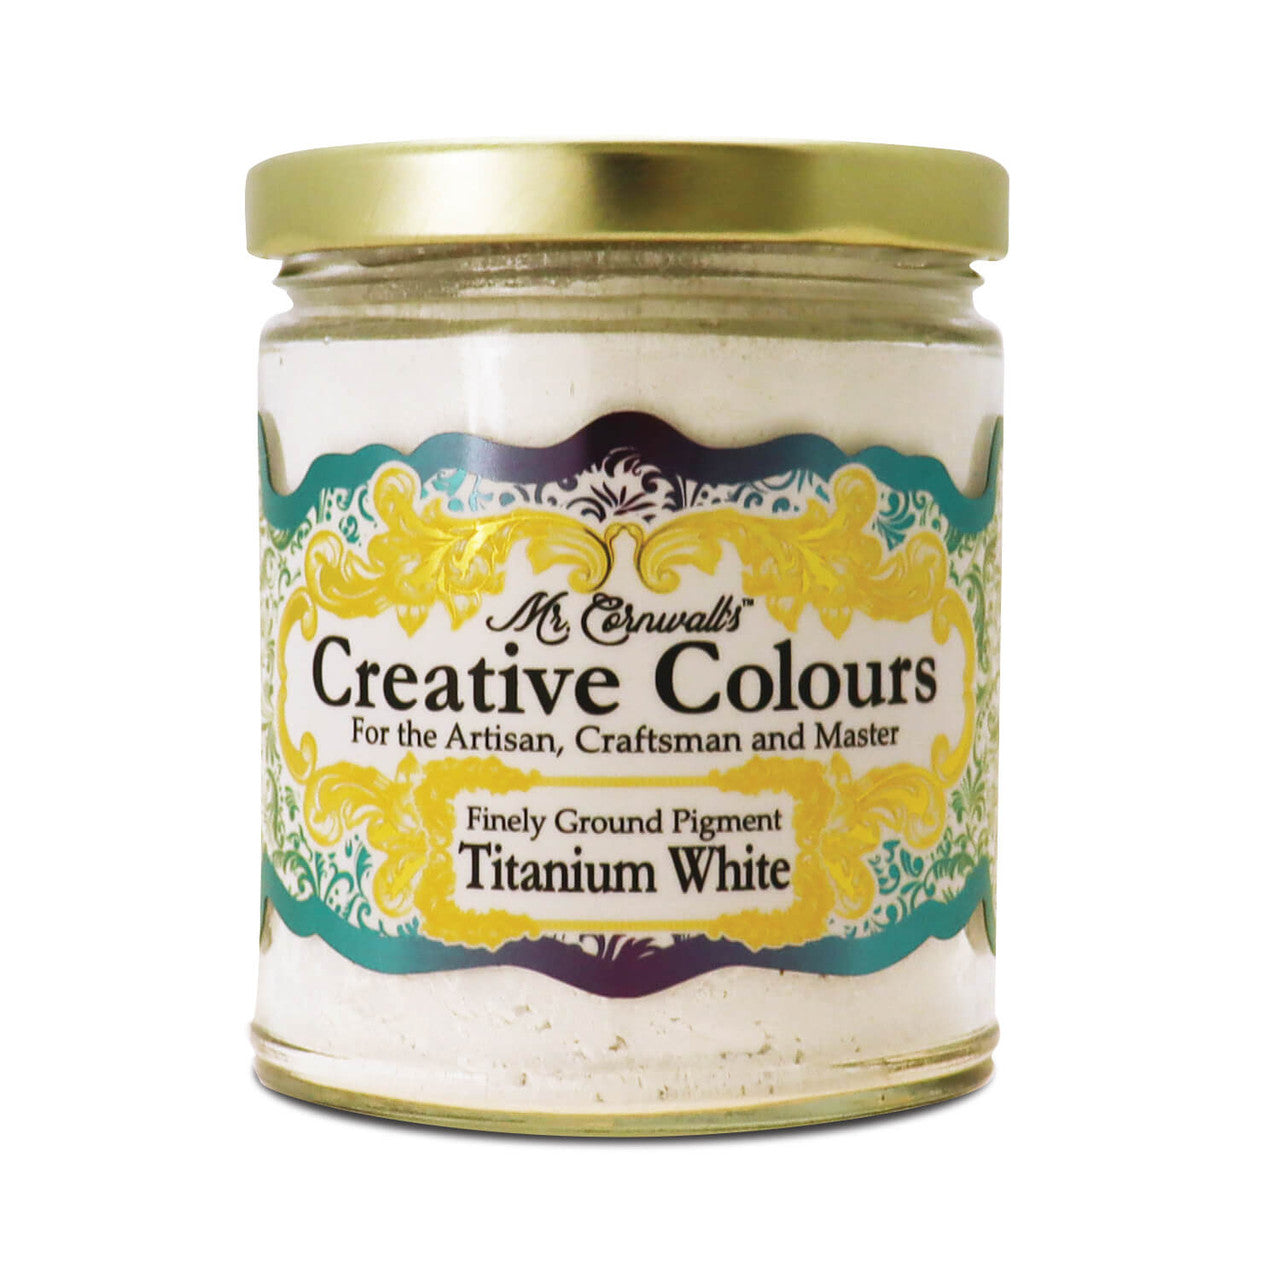 Mr. Cornwall’s Creative Colours pigment – Titanium White